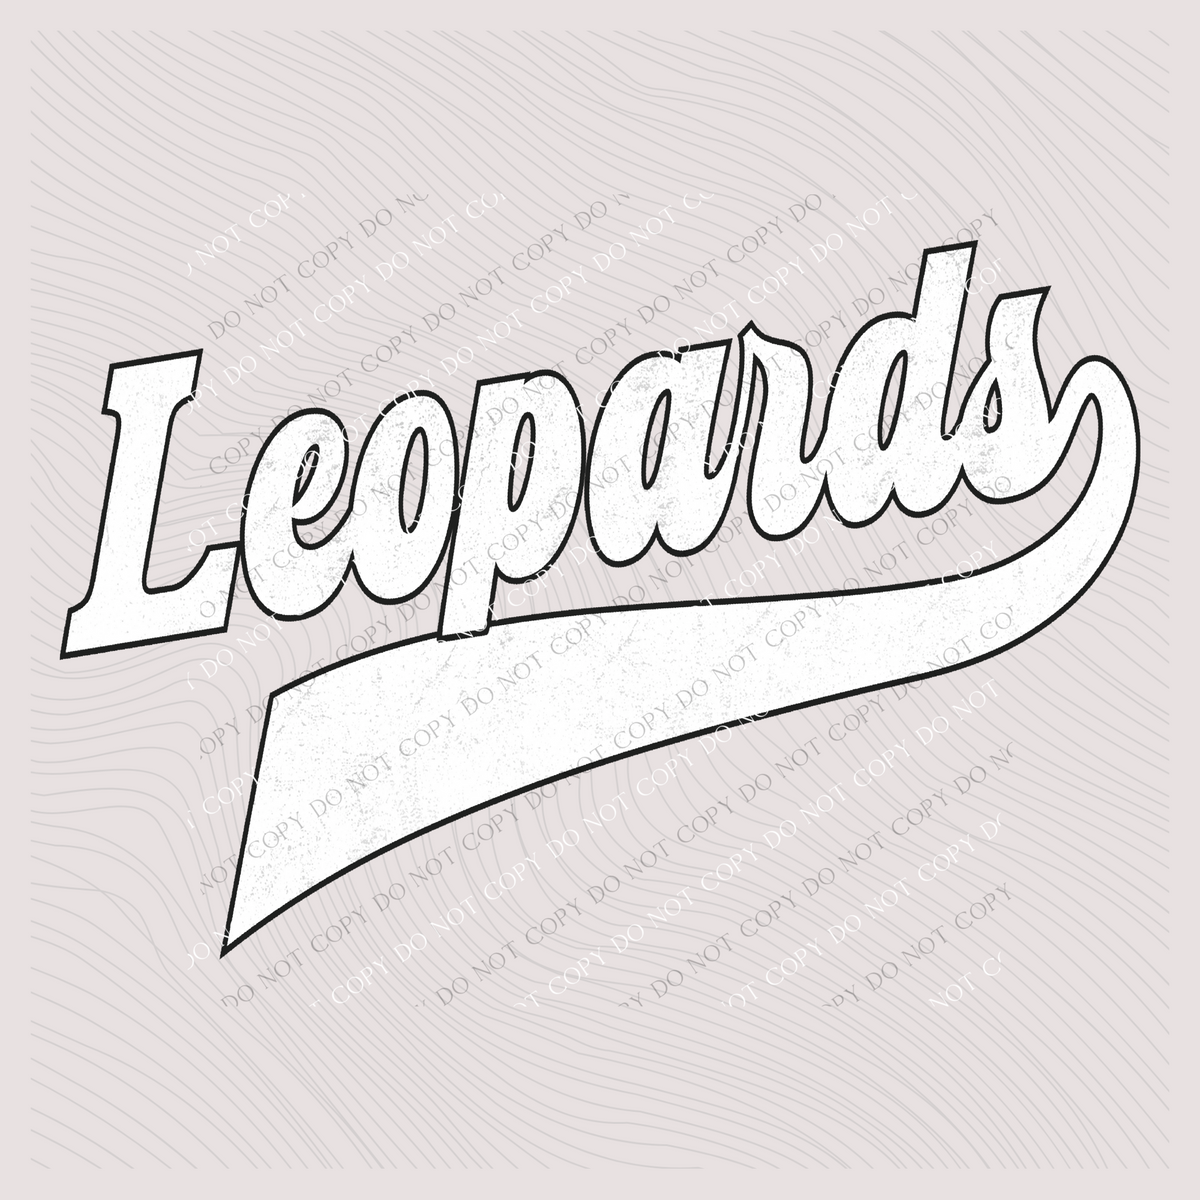 Leopards Aged Old School Digital Design in White with Black Outline, PNG